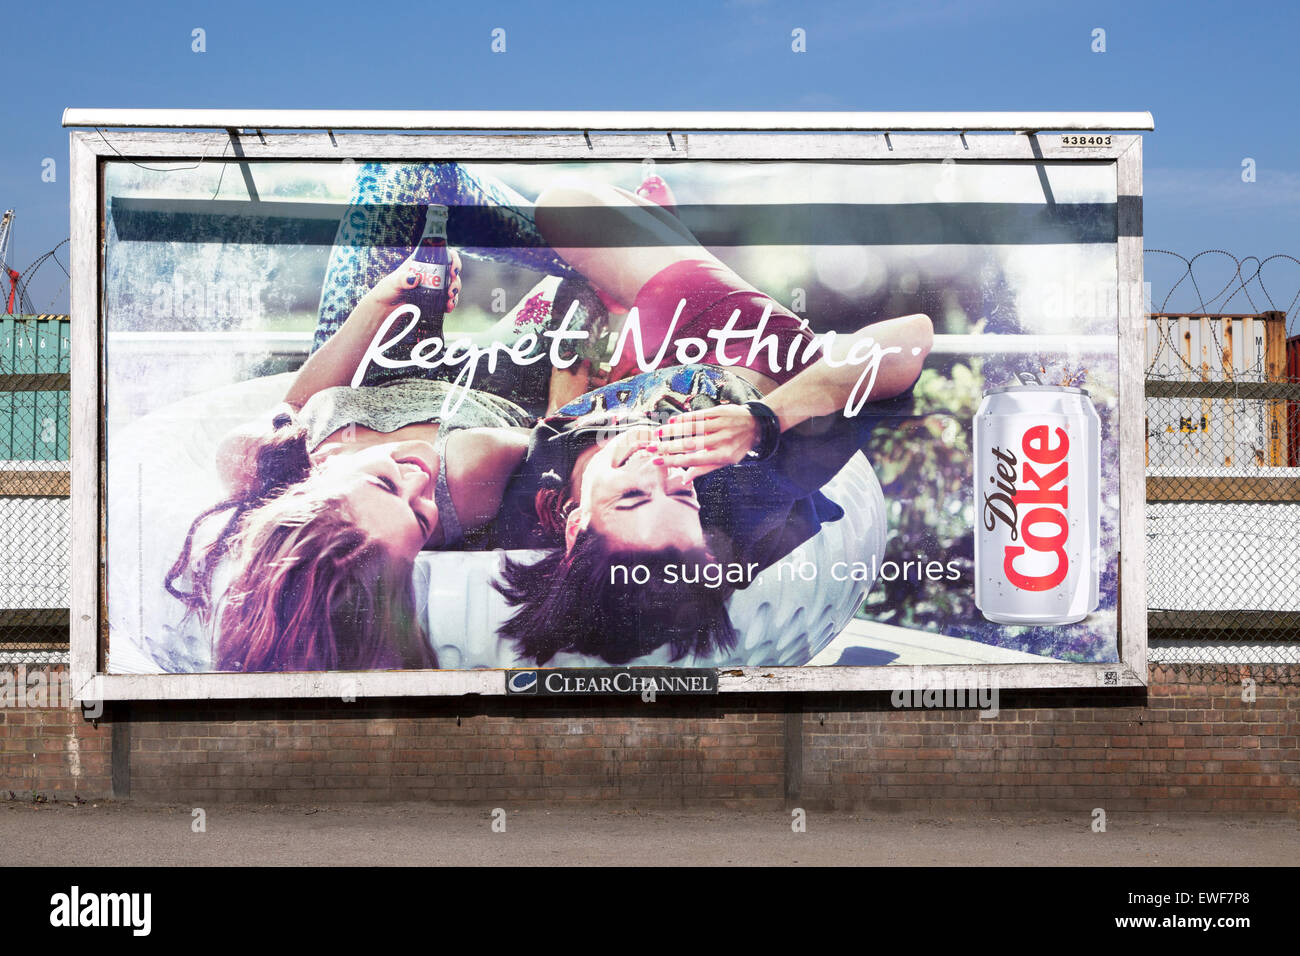 Plakat-Werbung Diet Coke, Ipswich, Suffolk, England, UK Stockfoto